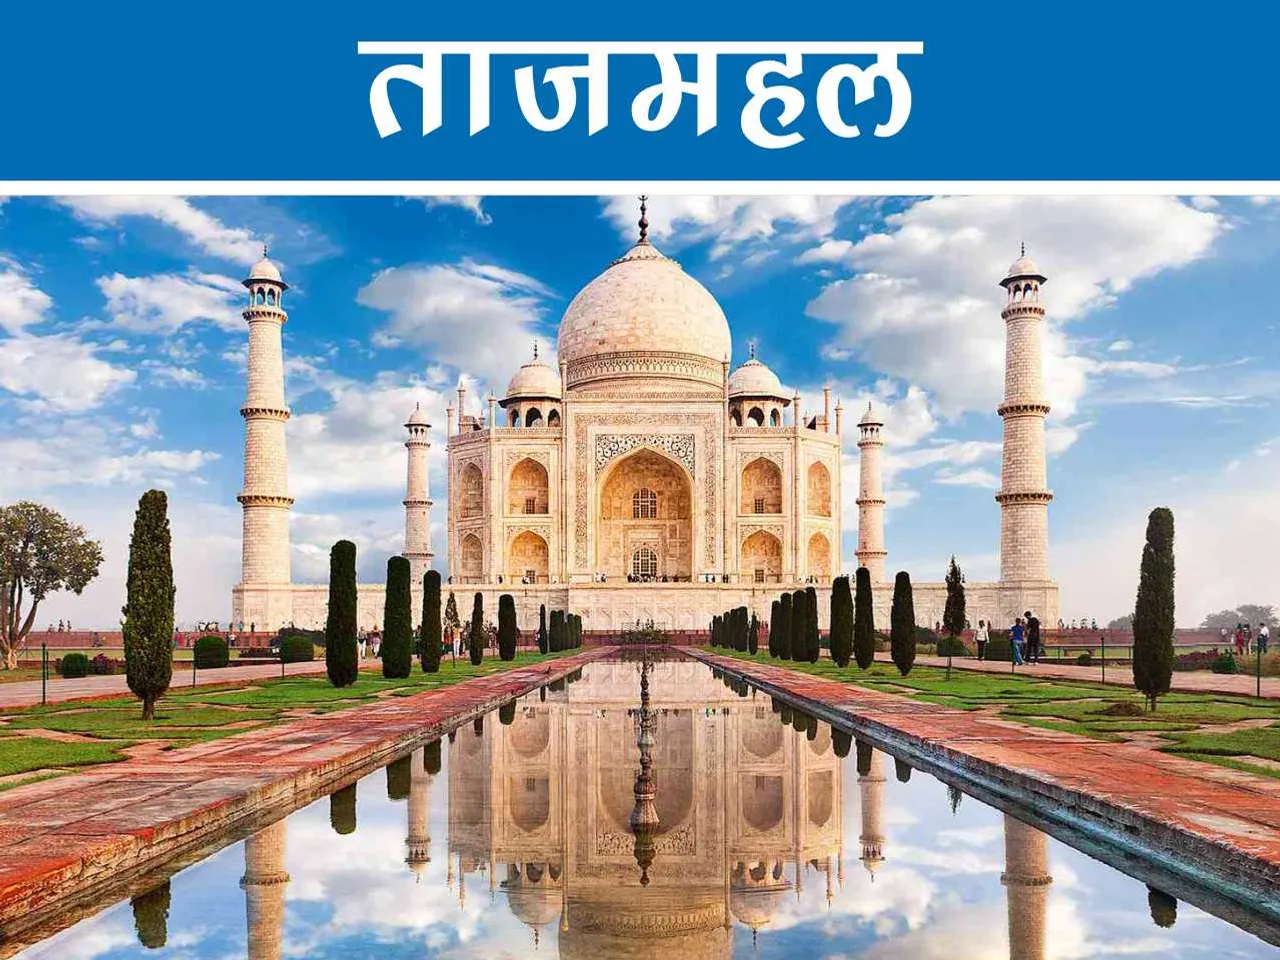 Facts about Taj Mahal